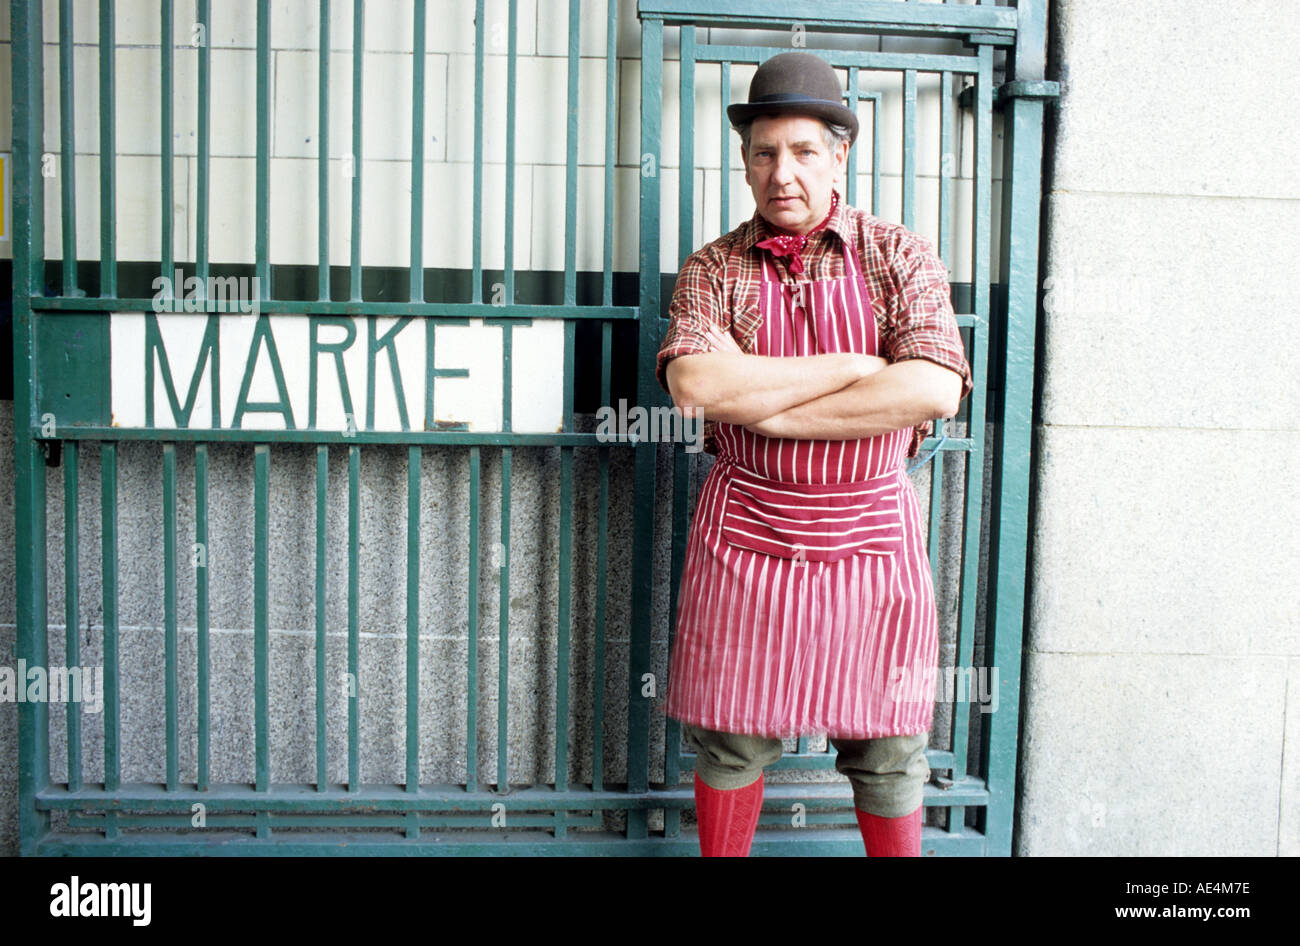 market man Stock Photo